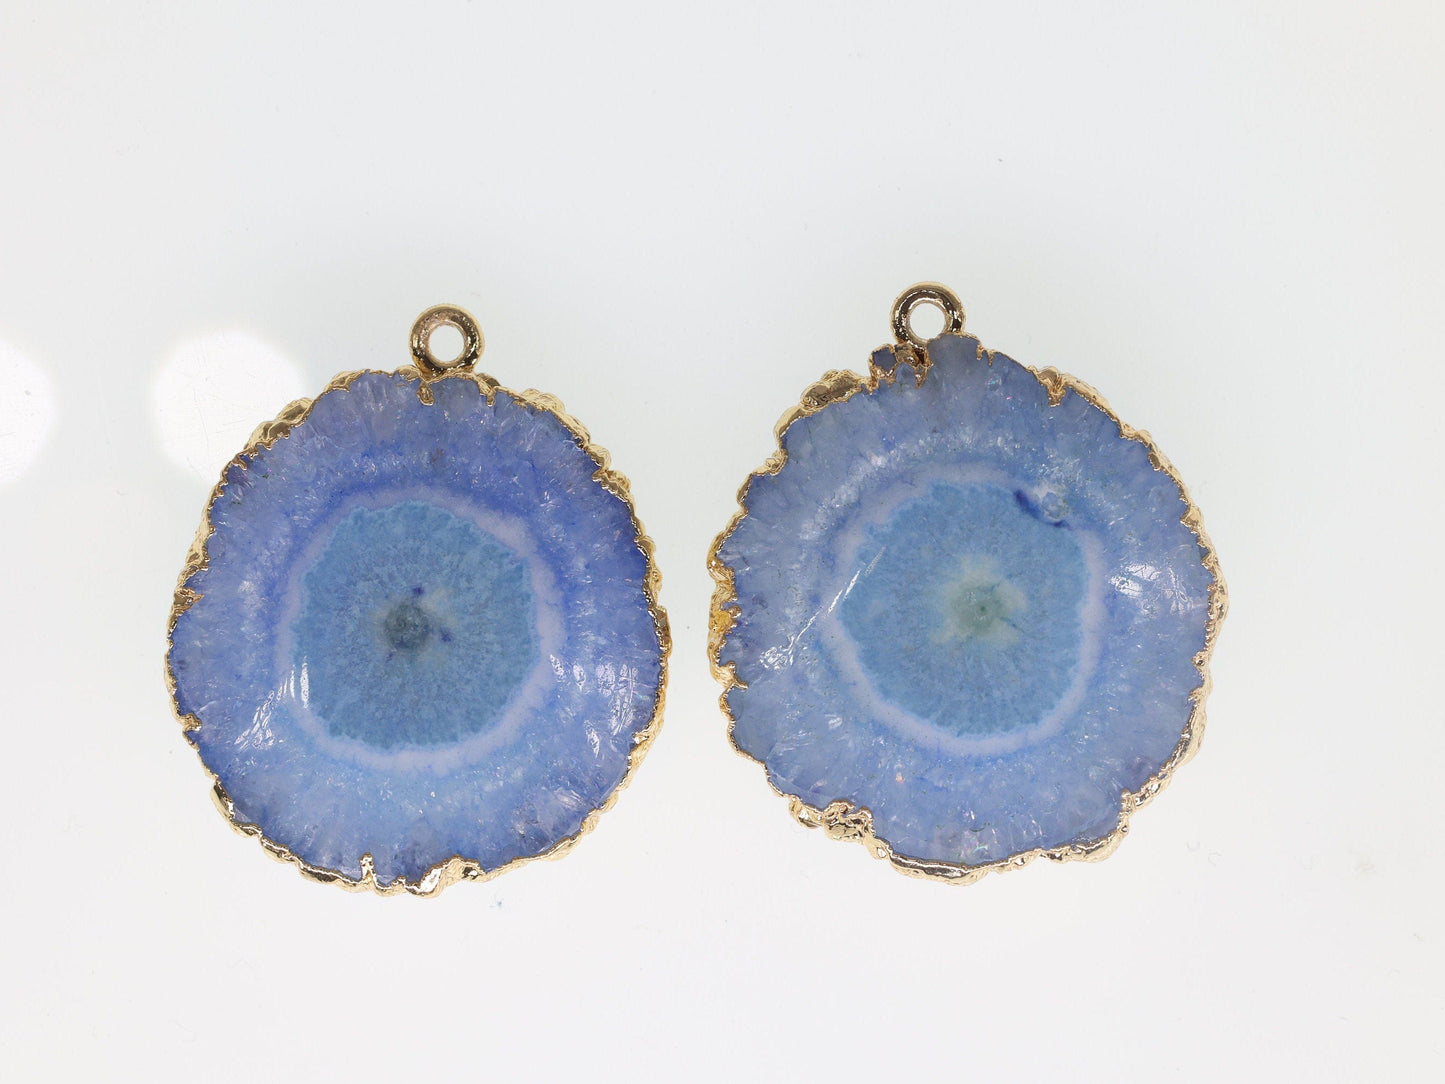 Pairs Blue Solar Quartz Gemstones For Earring 1 Bail Gold edged 20 - 30 mm 2 Side Hand Polished - Meena Design